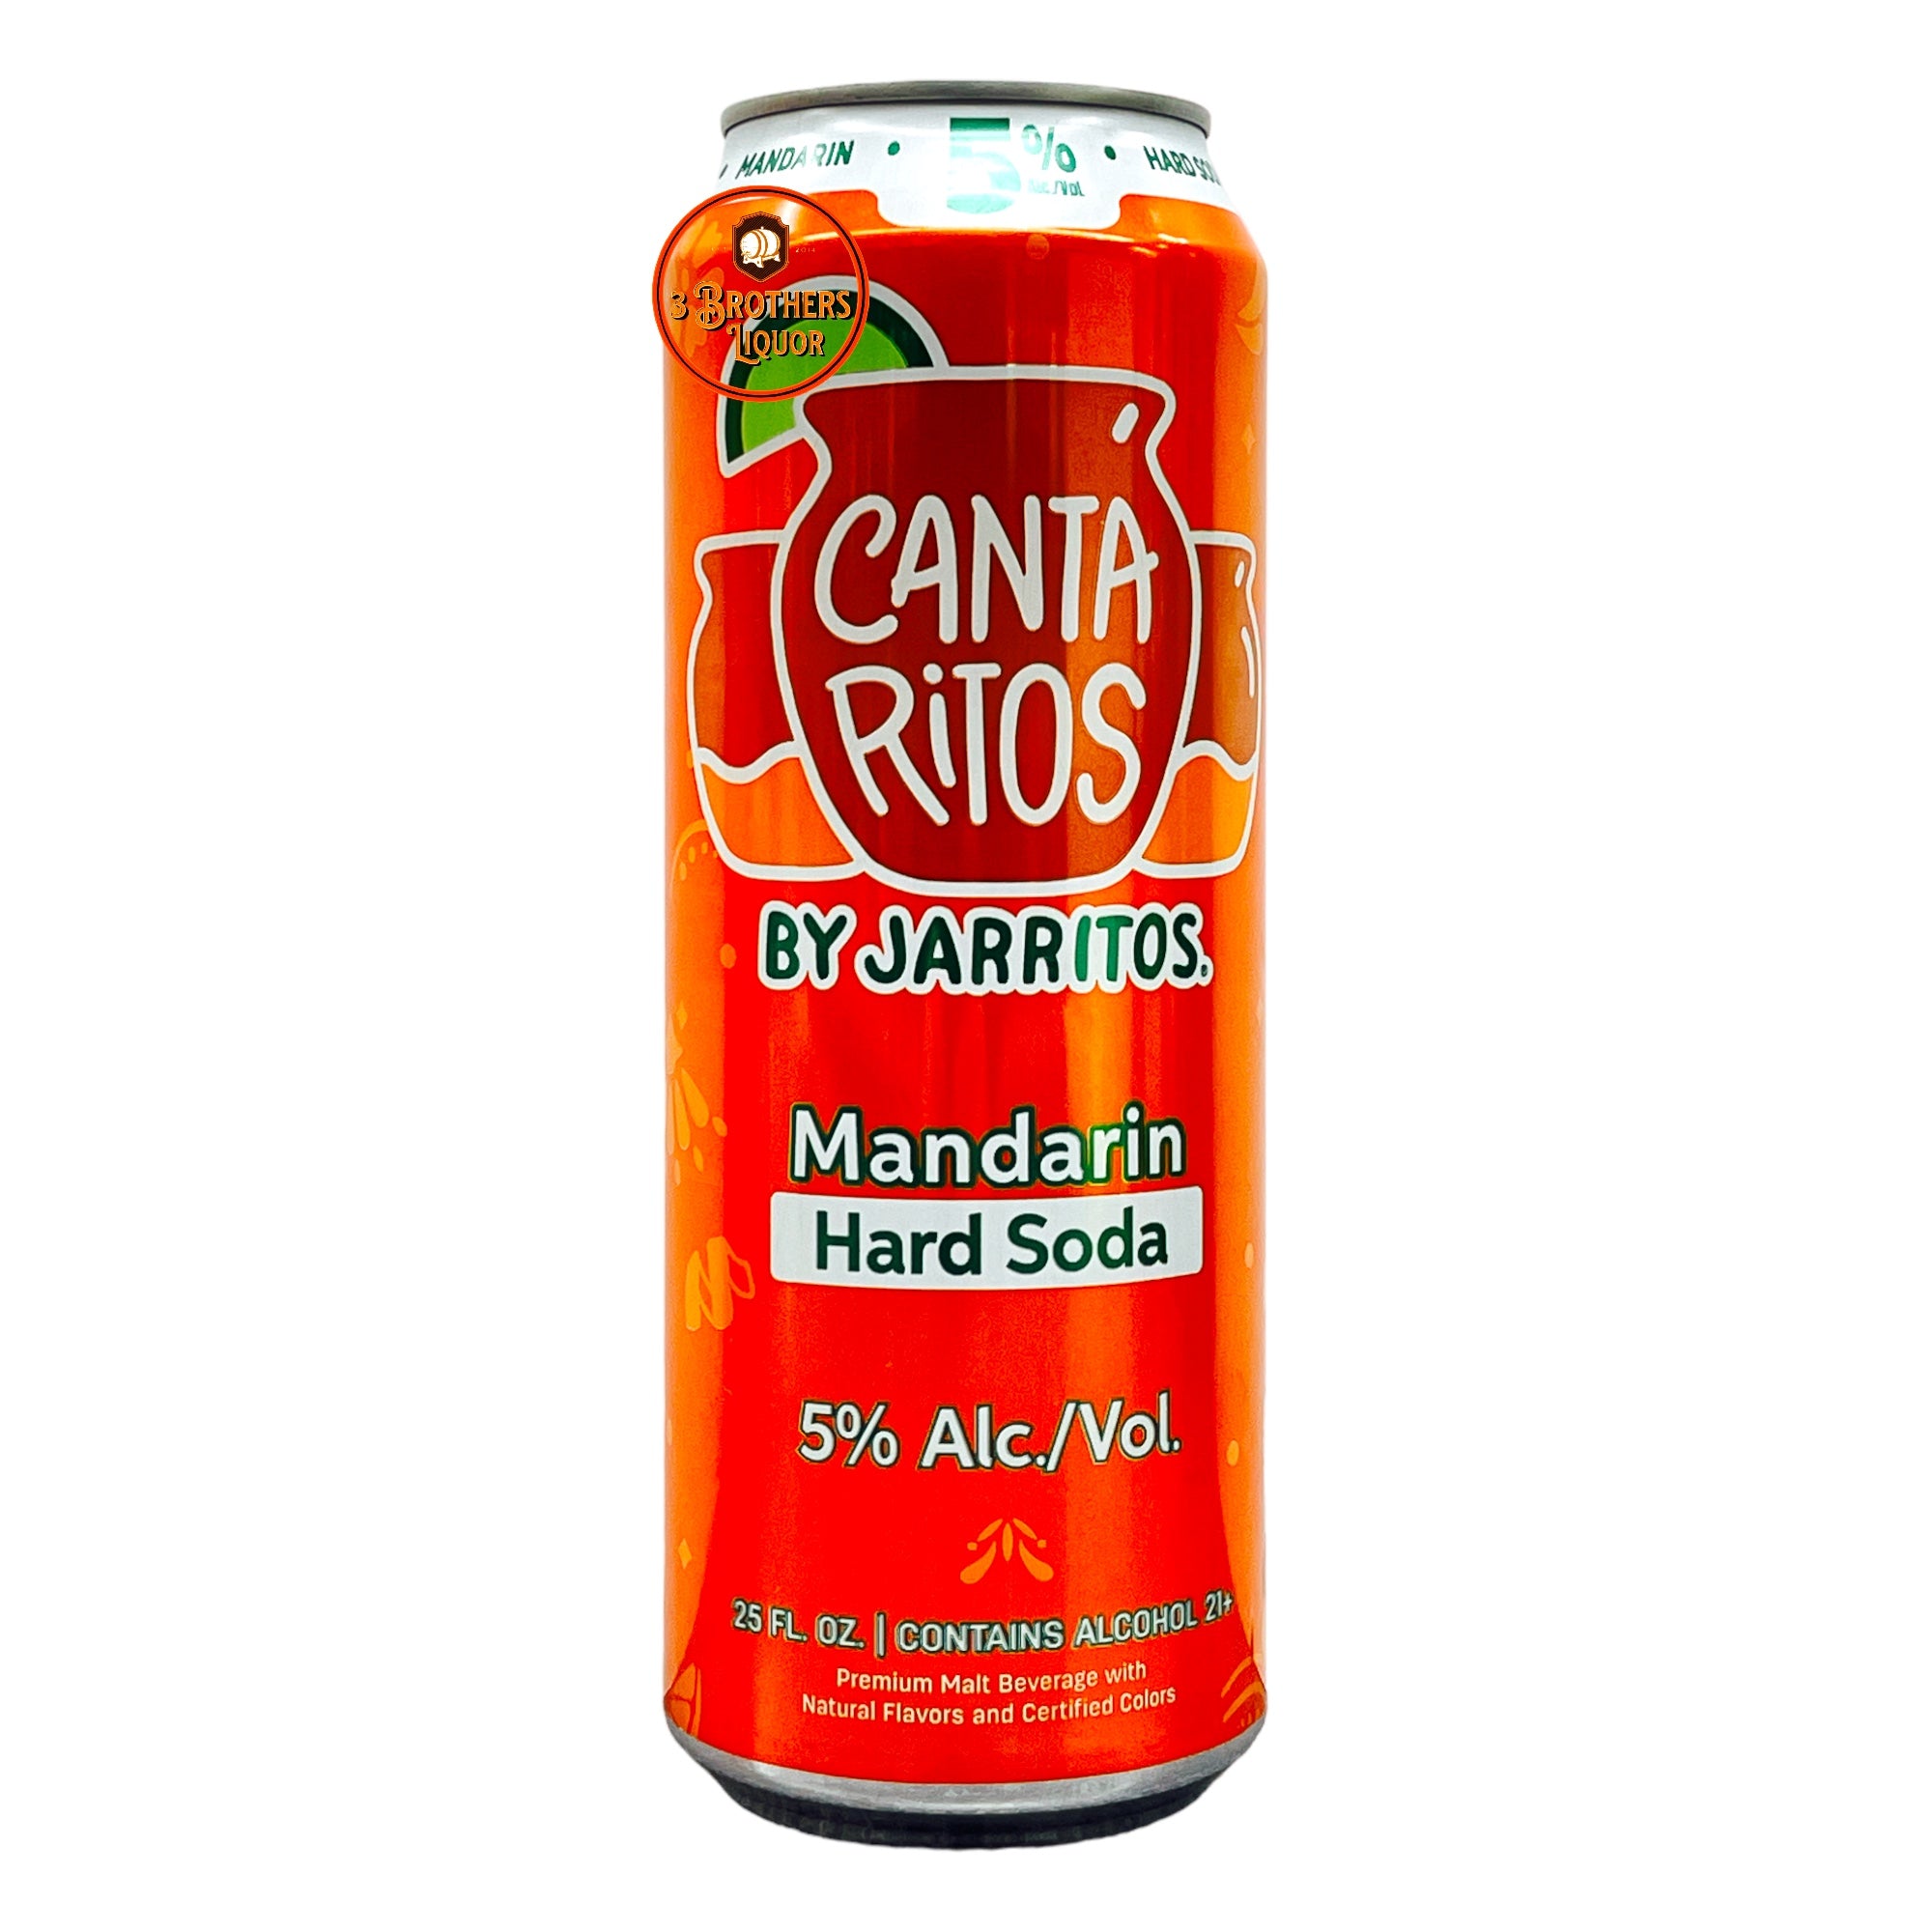 Canta Ritos By Jarritos Mandarin Hard Soda Malt Beverage